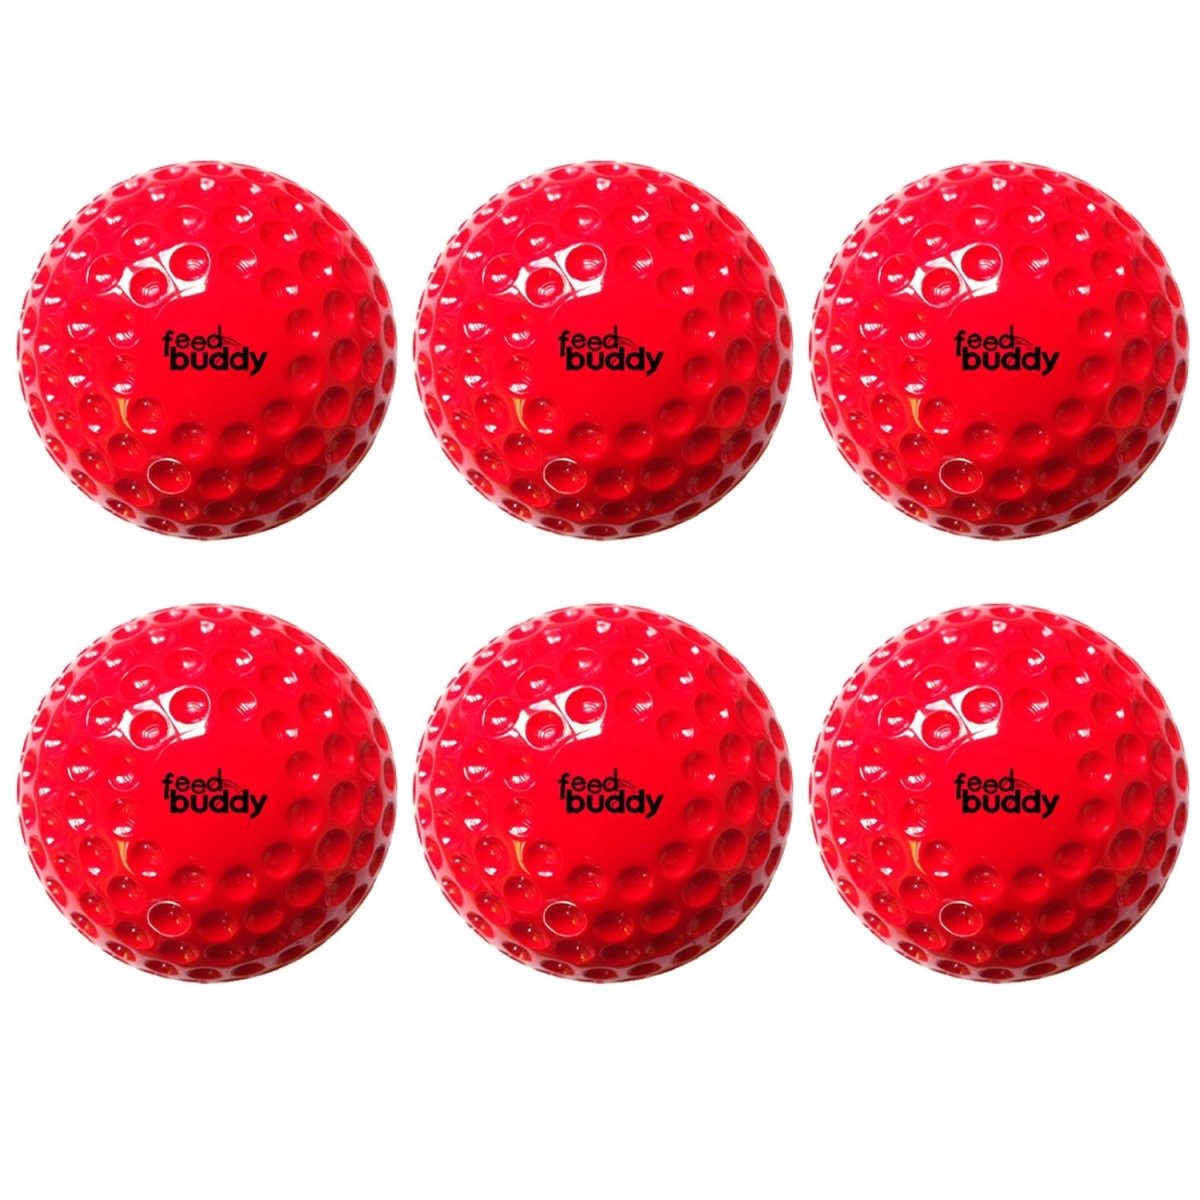 Speed Buddy Soft balls (Pack of 6)